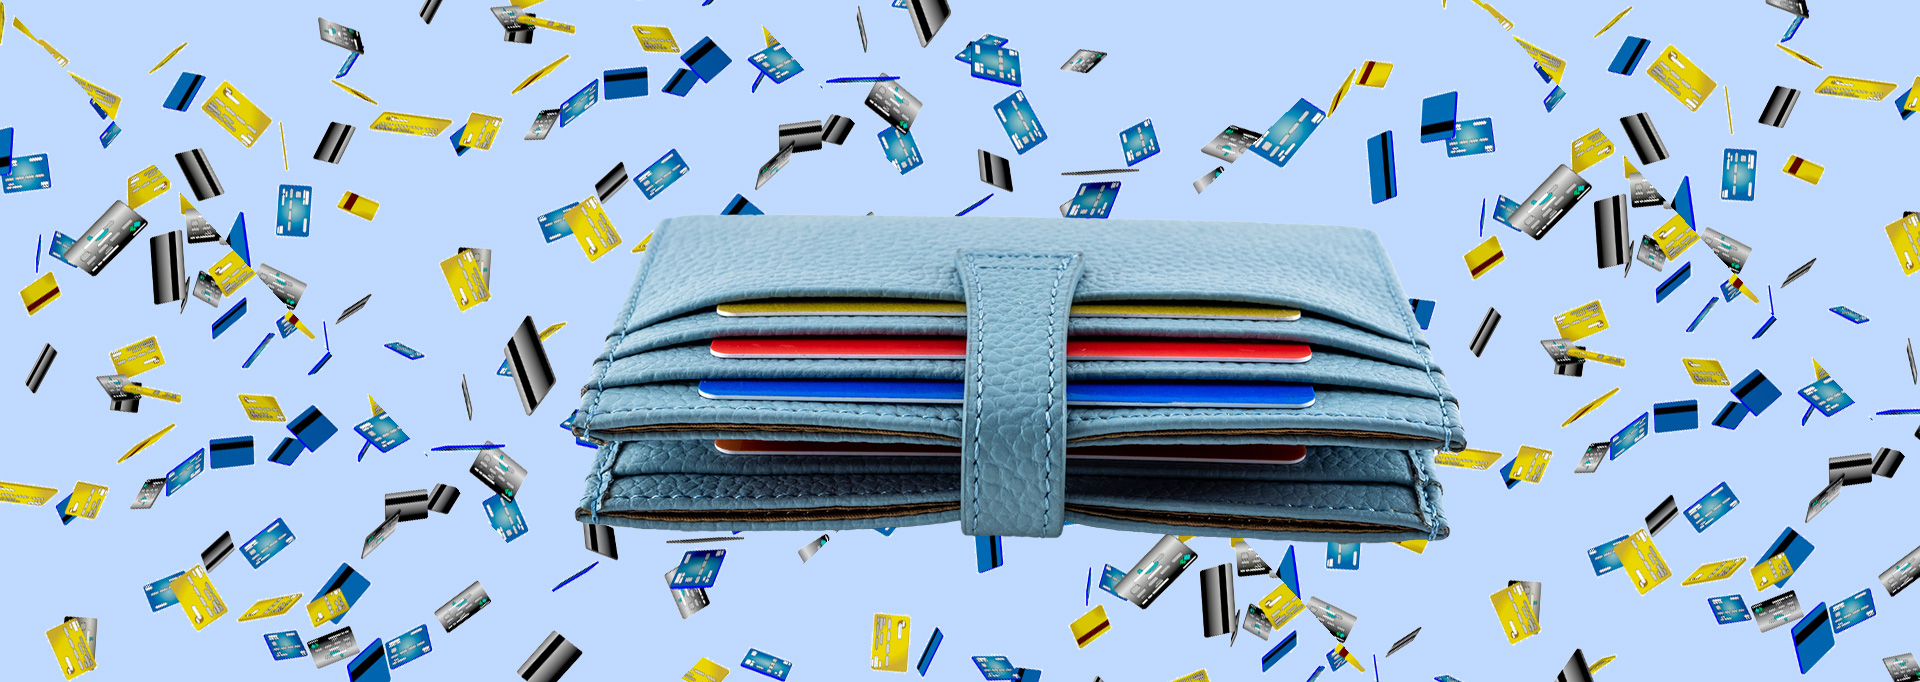 credit cards floating behind wallet